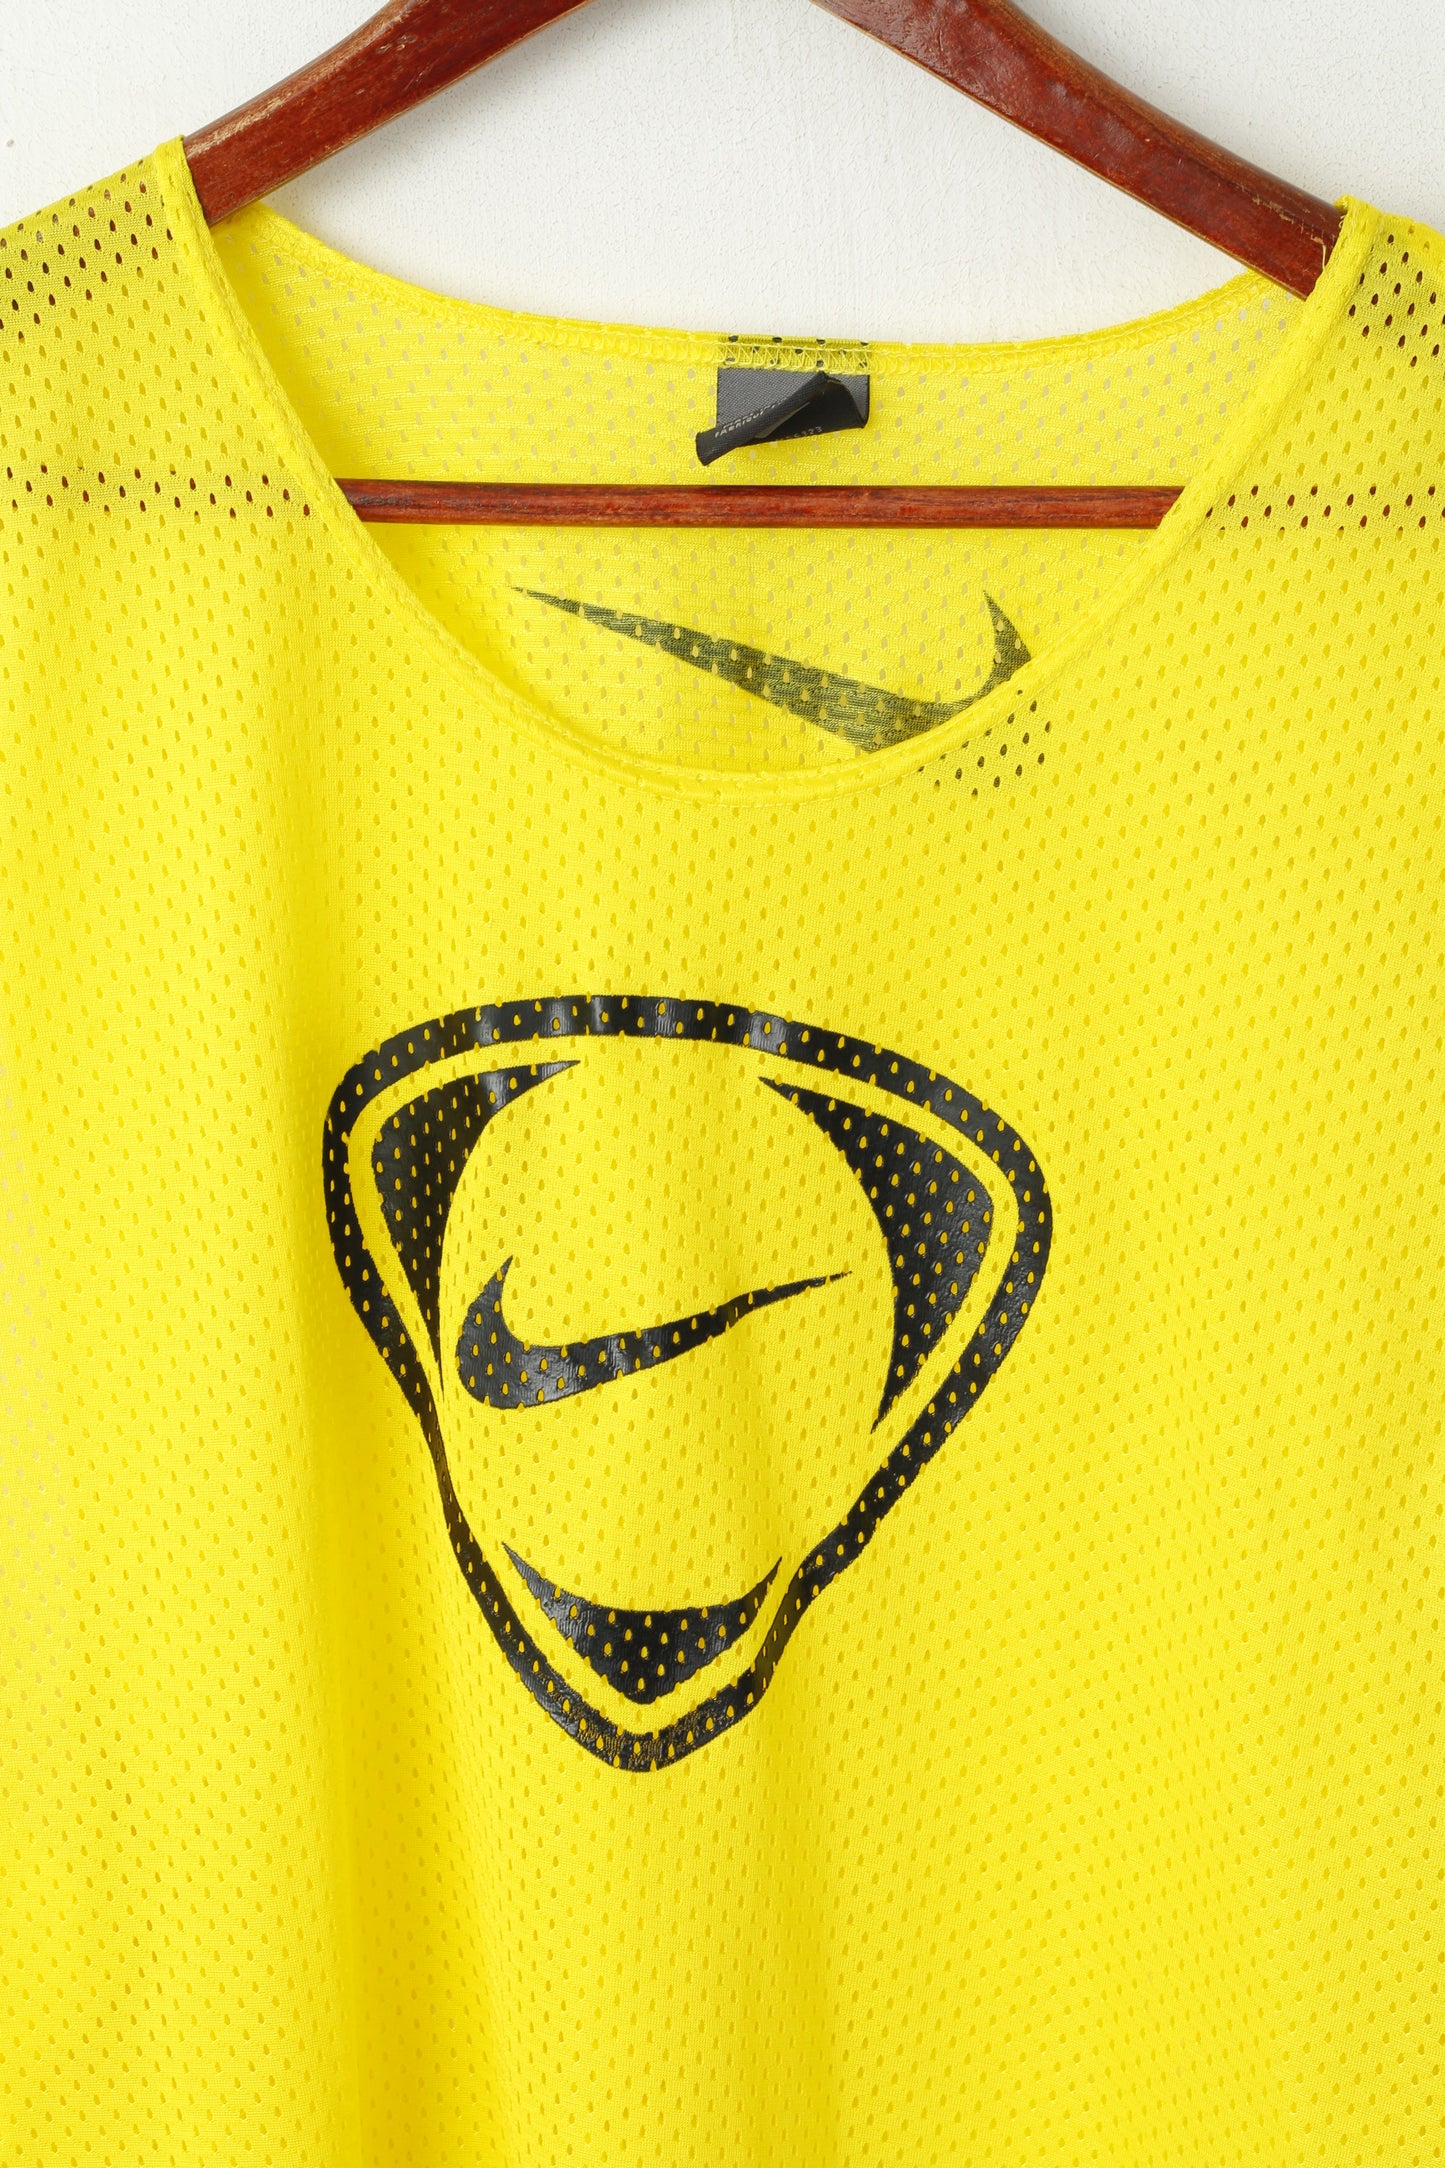 Nike Men One Size Shirt Yellow Sleeveless Mesh Sport Training Vest Top